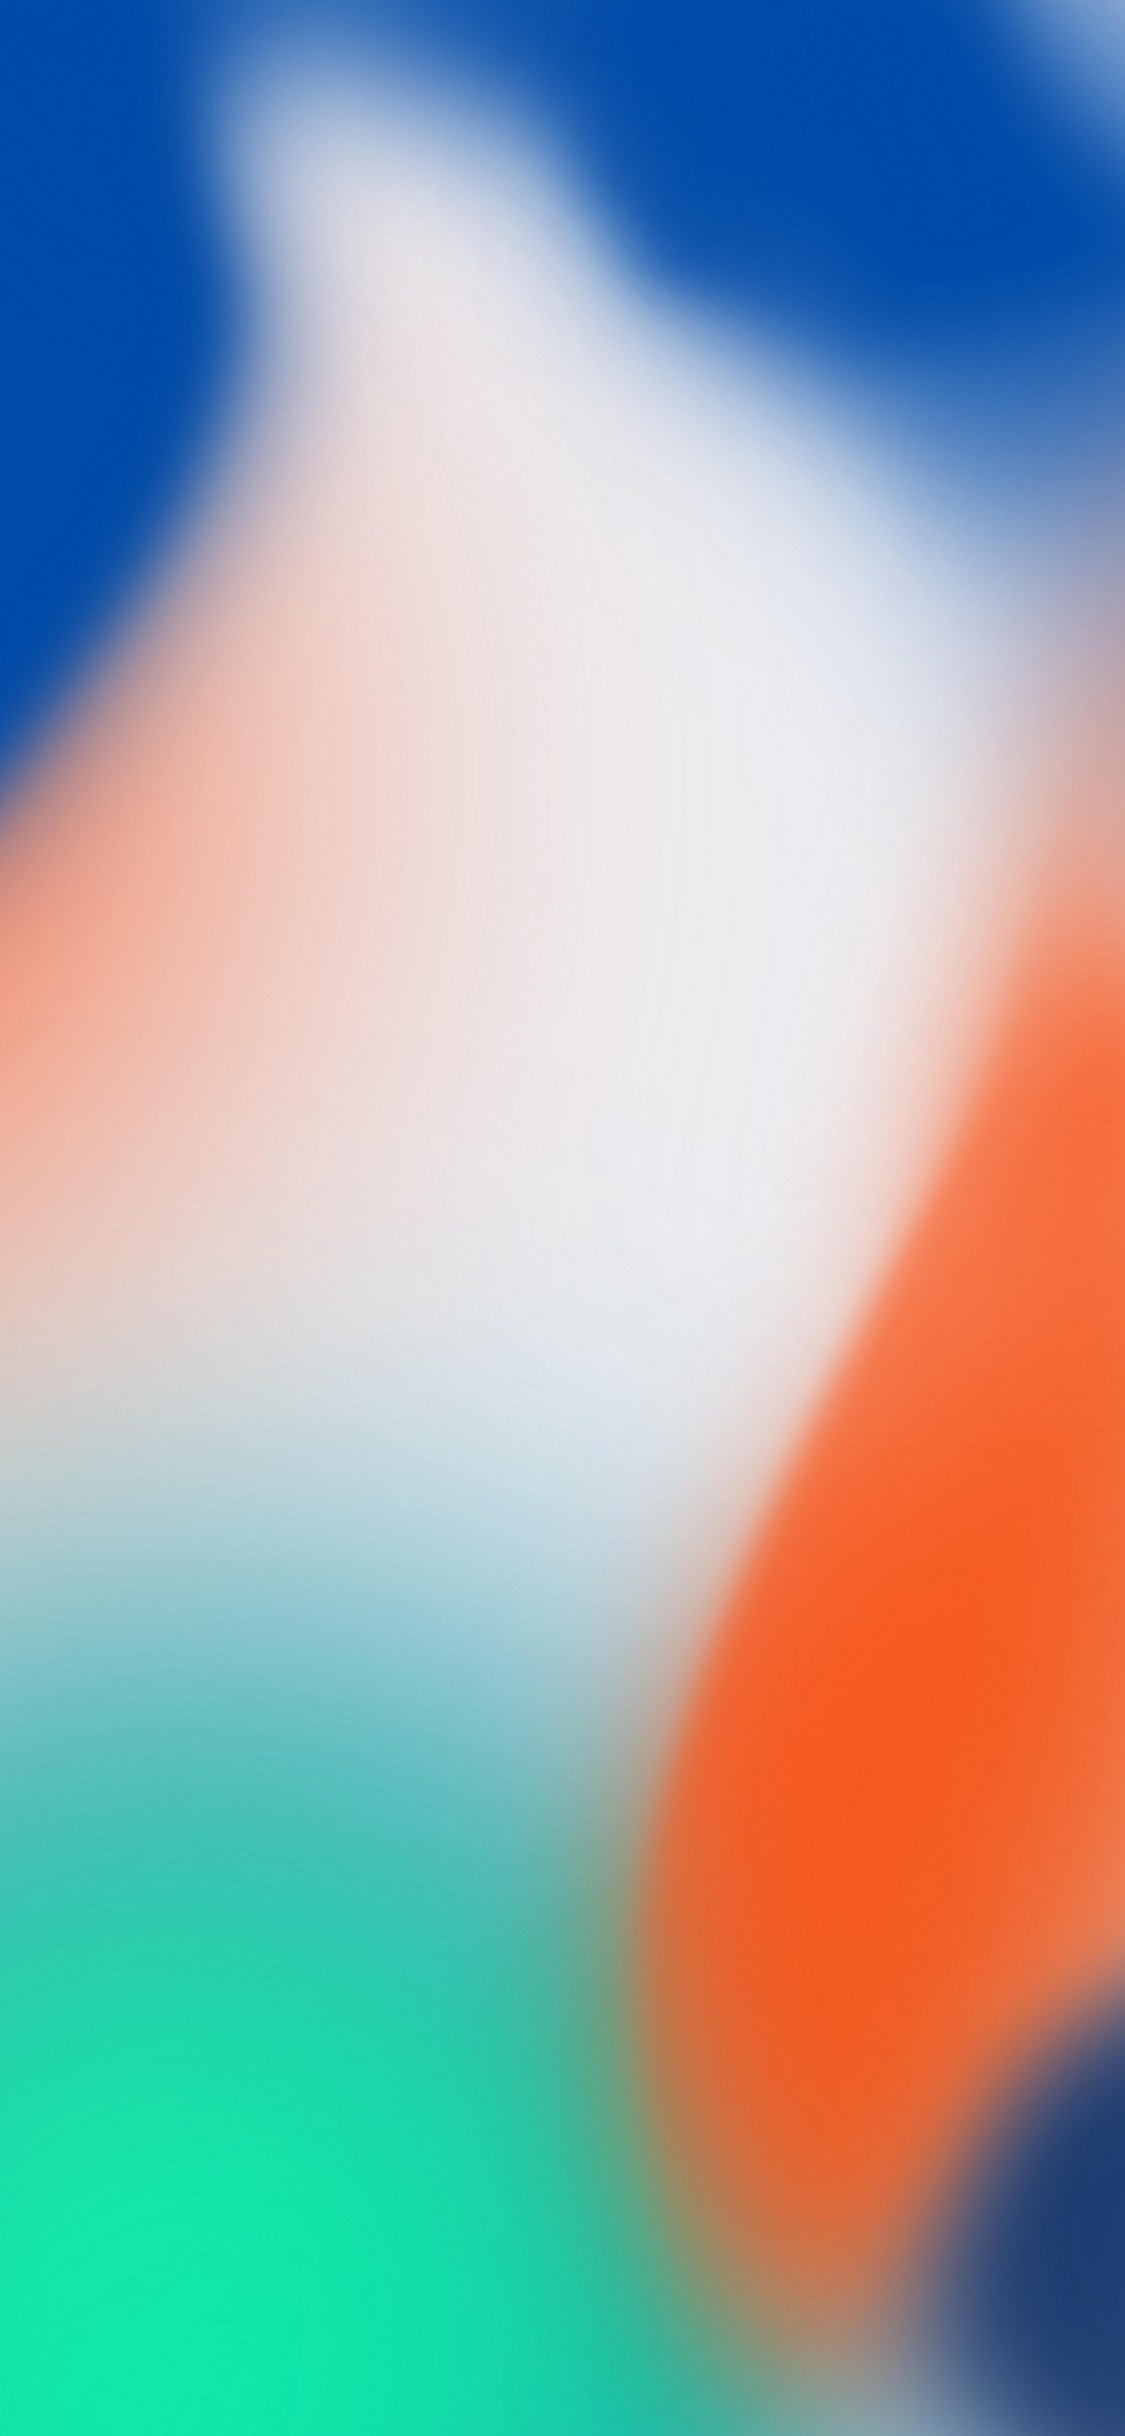 iPhone X Wallpaper Home Screen - 2020